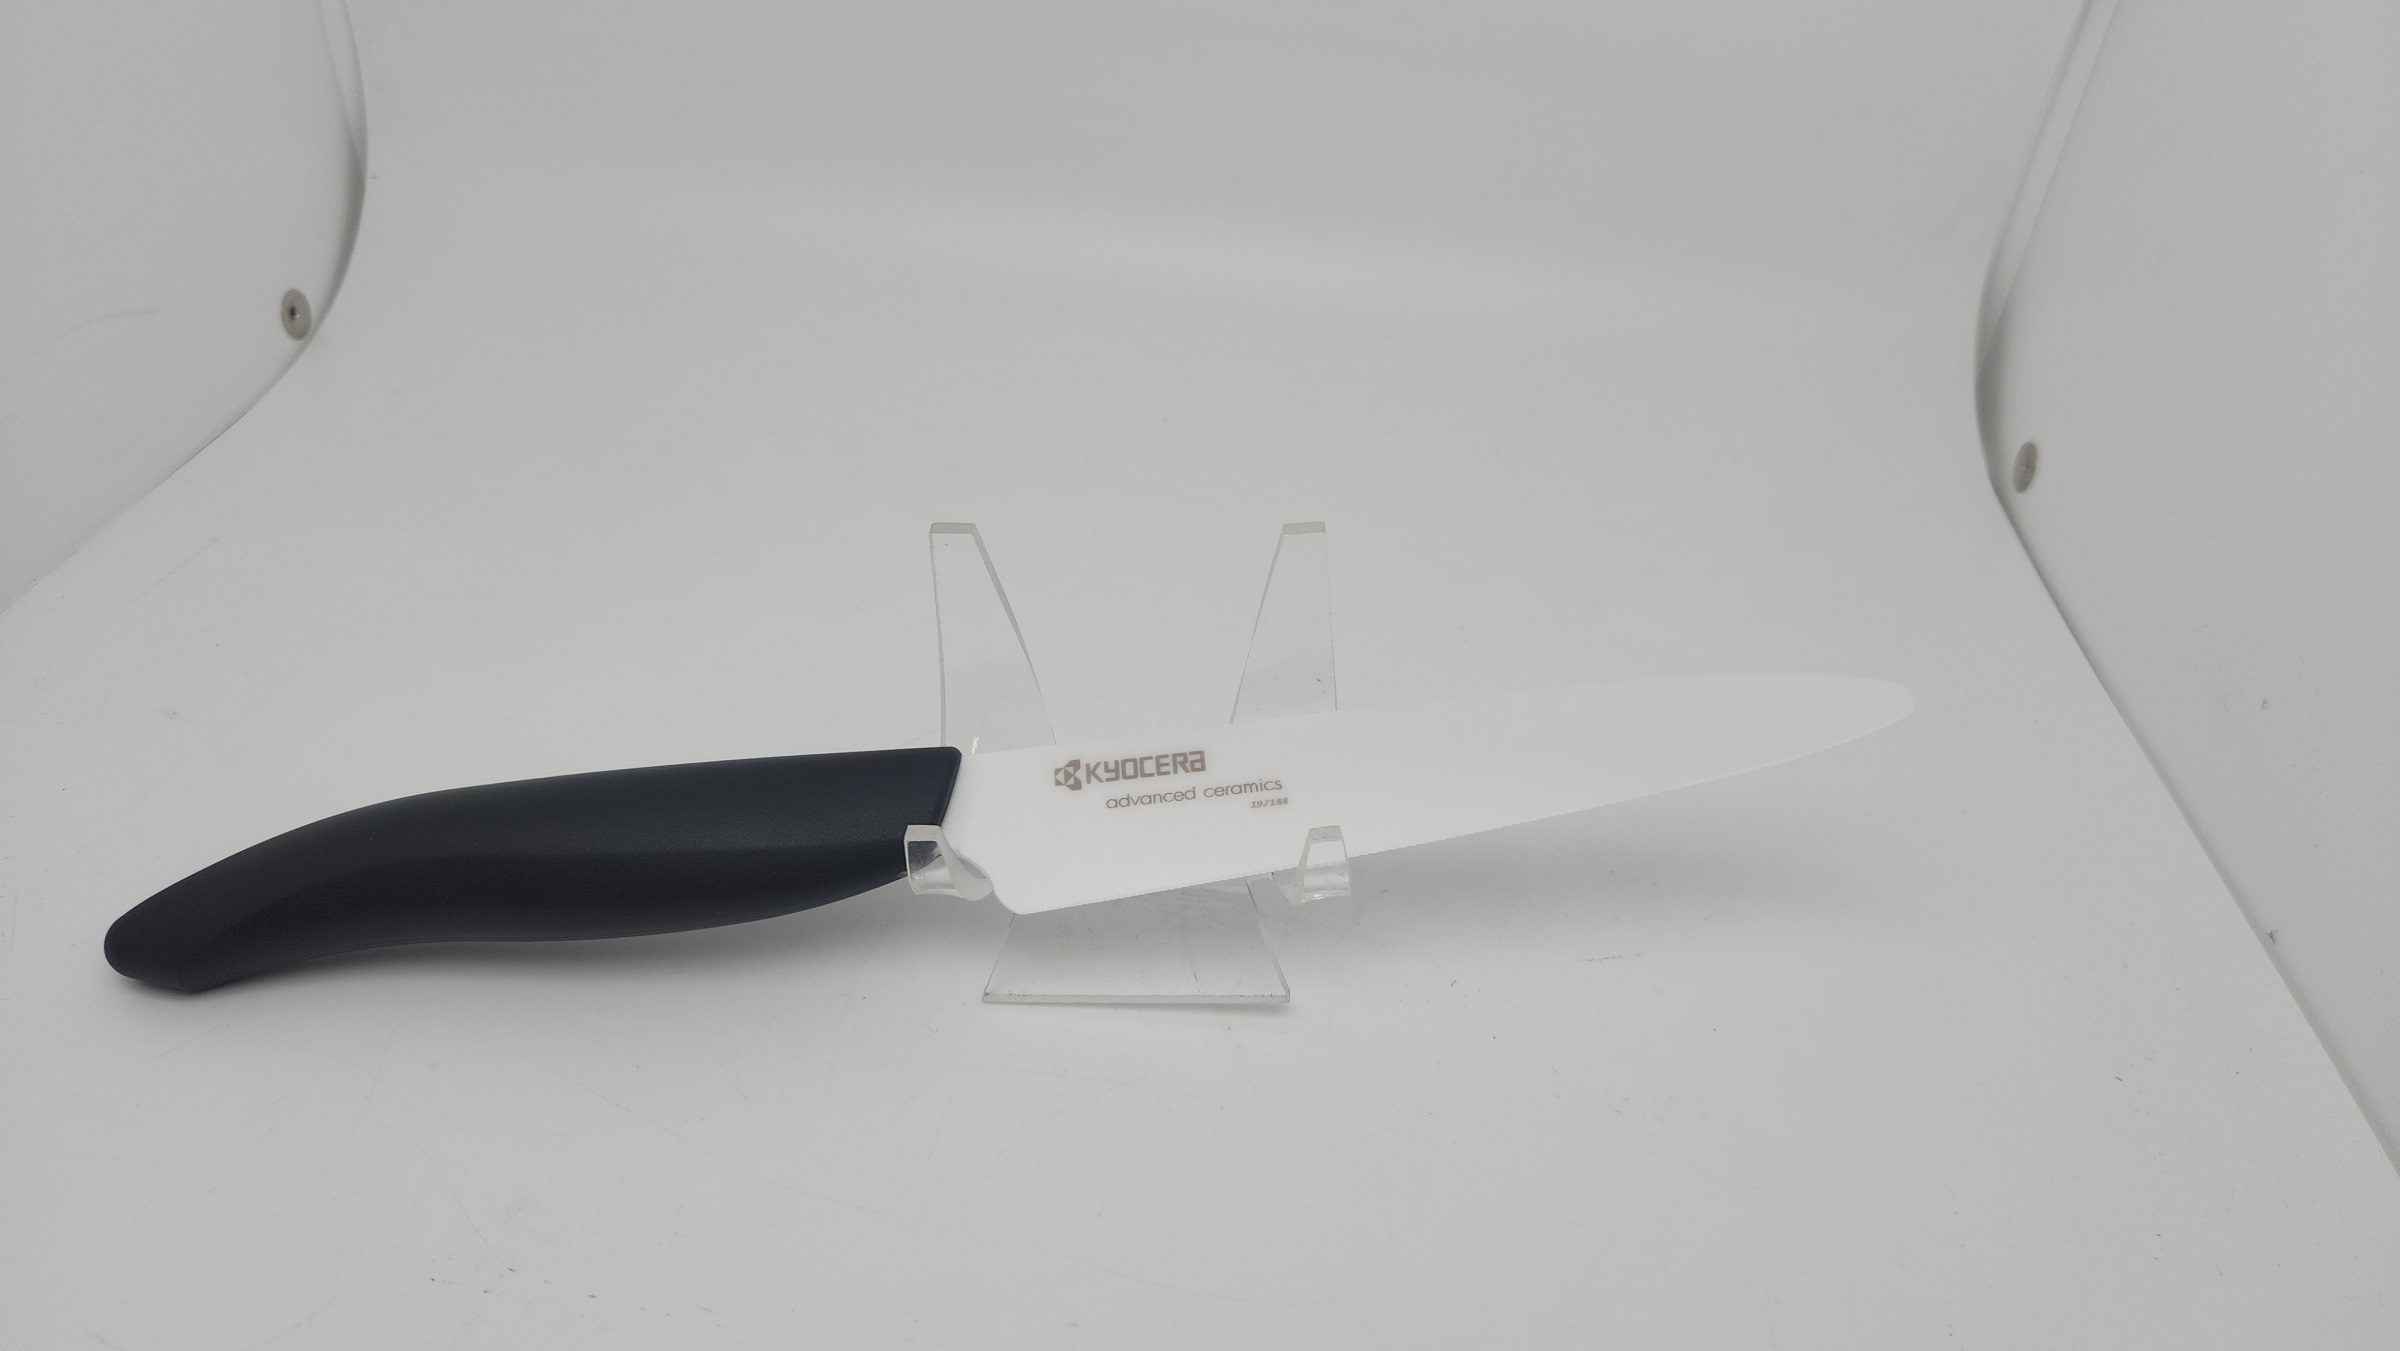 Kyocera Revolution 3-Piece Ceramic Knife Set